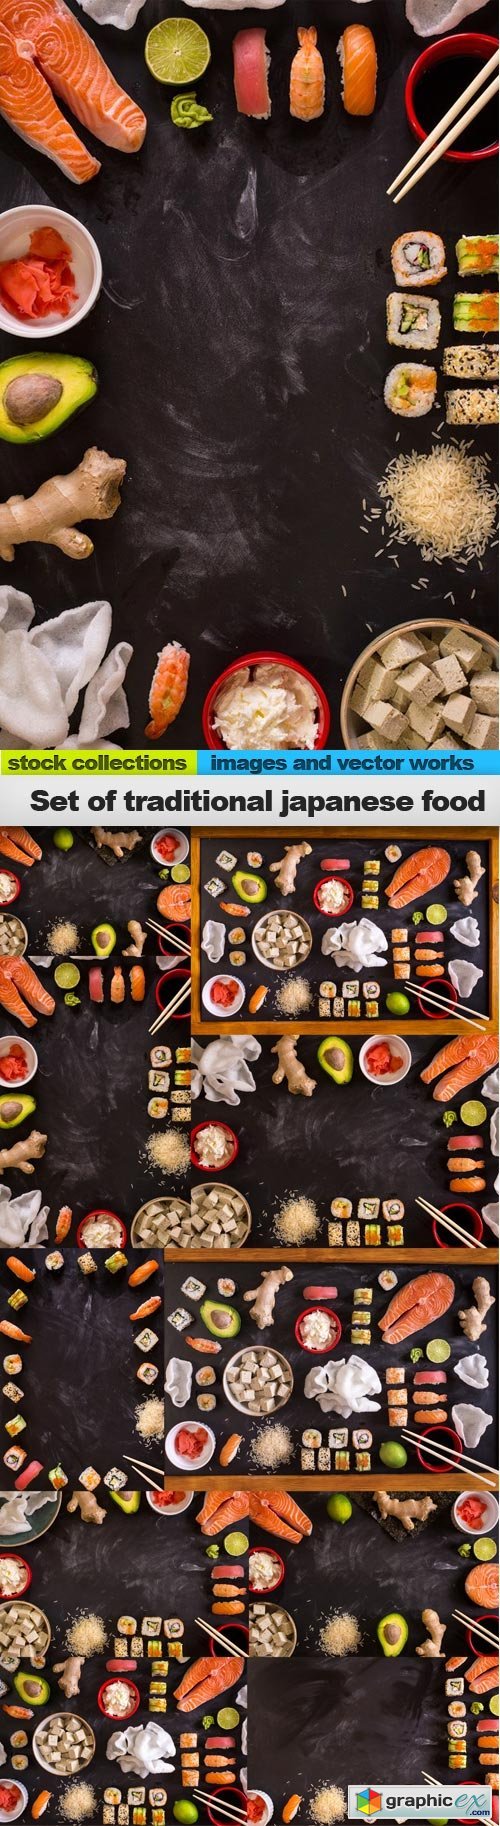 Set of traditional japanese food, 10 x UHQ JPEG